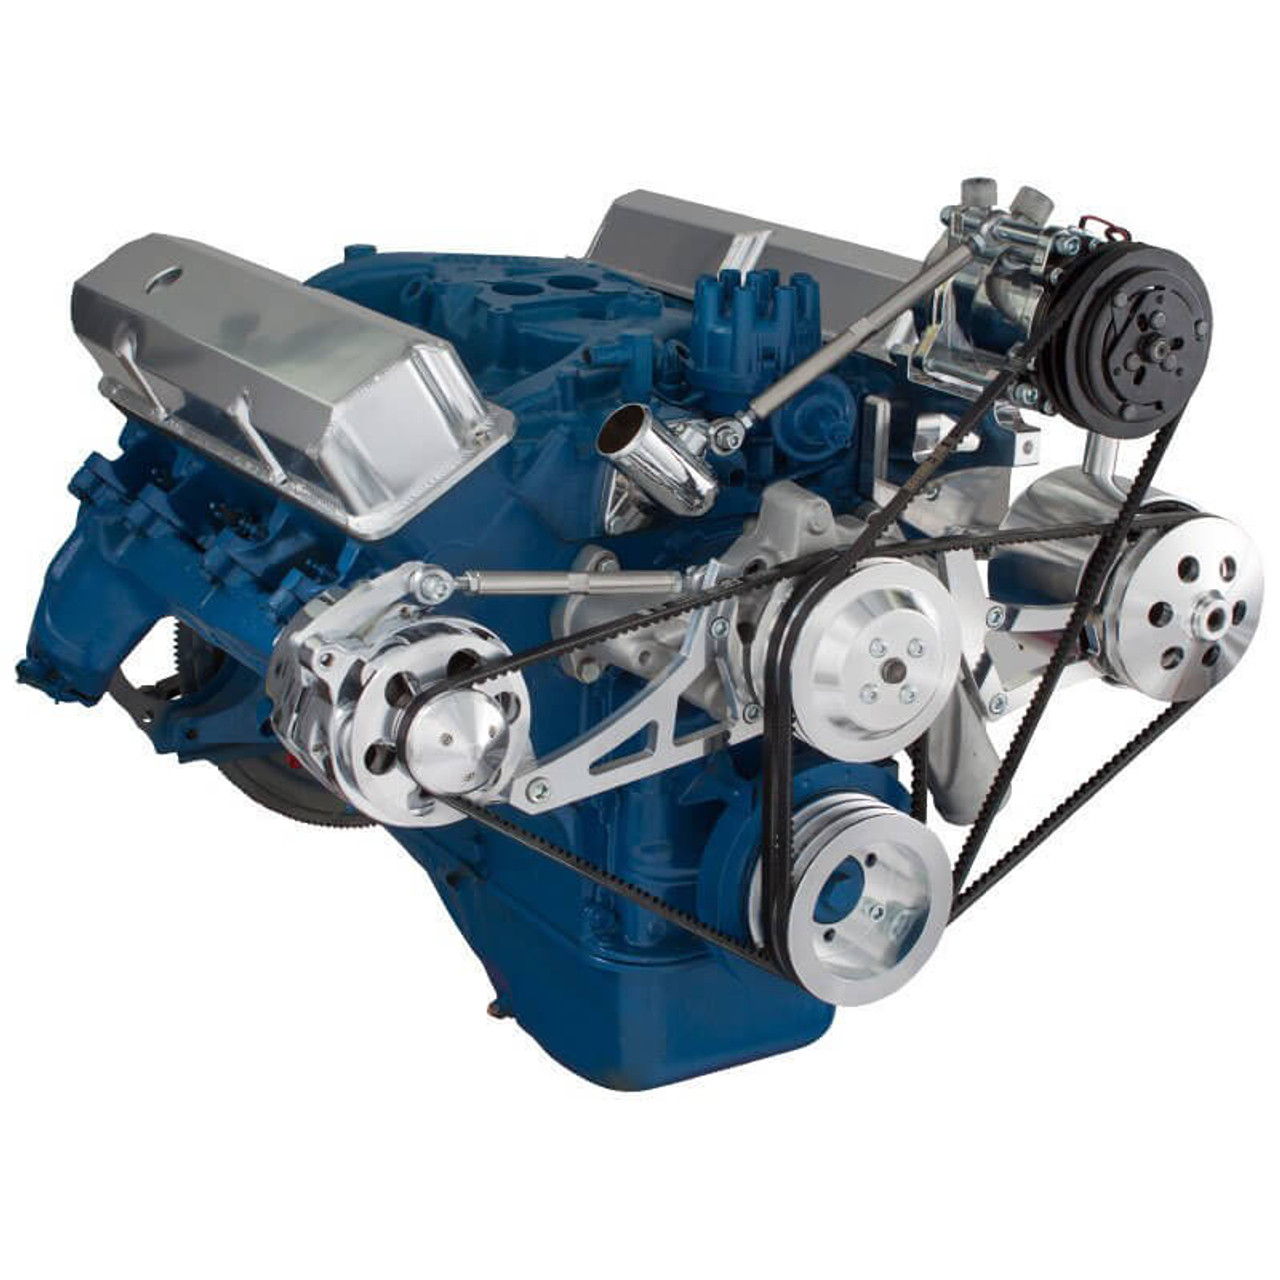 Ford 390 FE Engine VBelt Pulley System Ford Pump